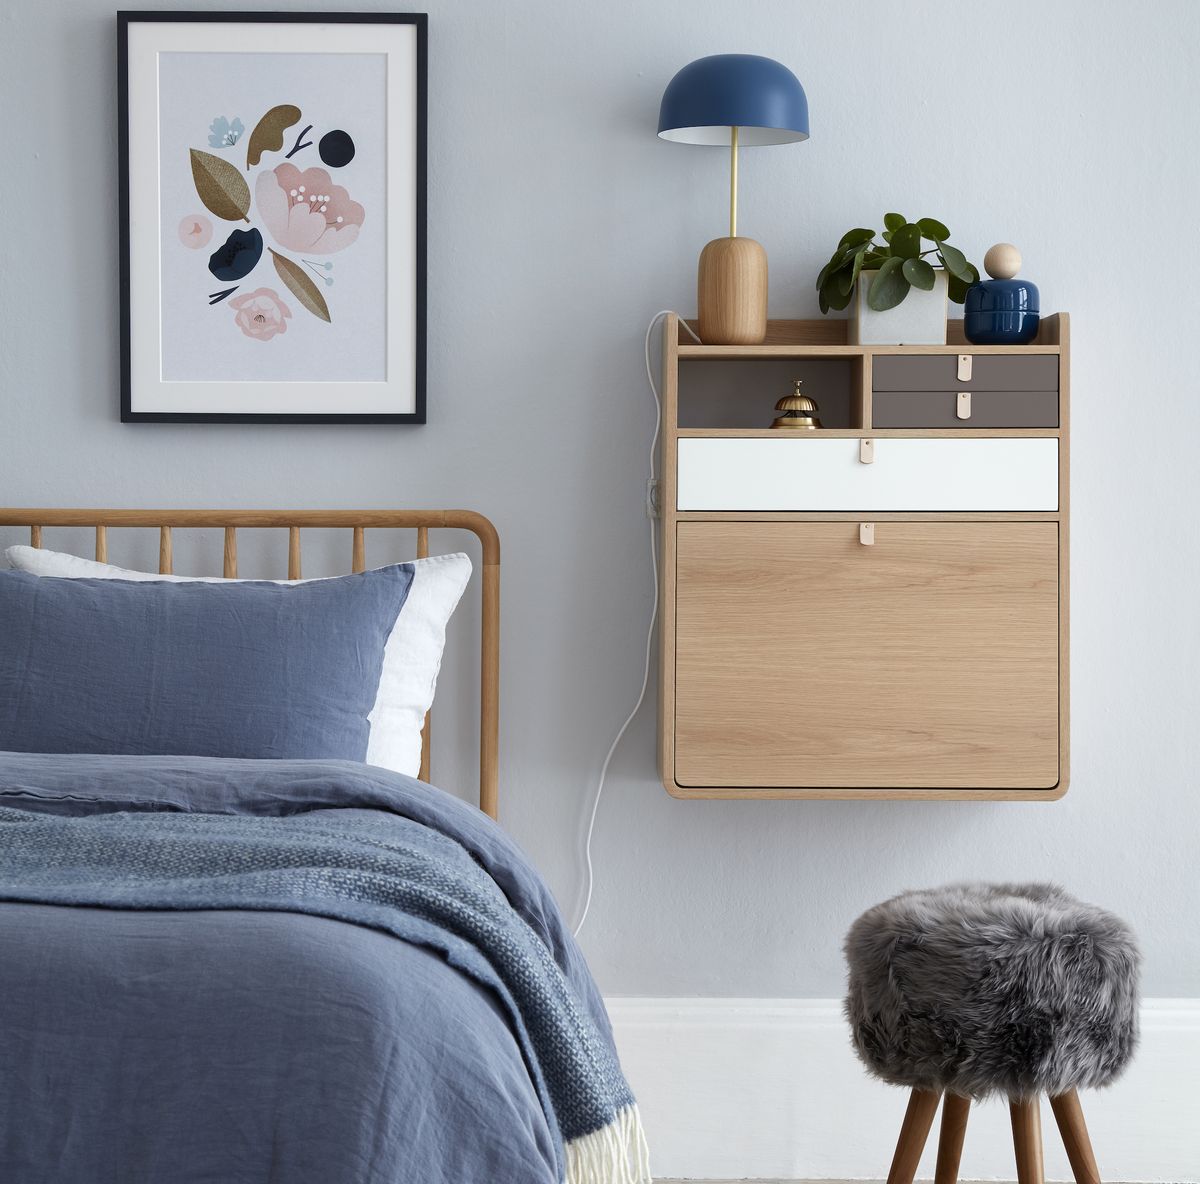 Modern bedroom ideas – wake up to 10 fresh styles